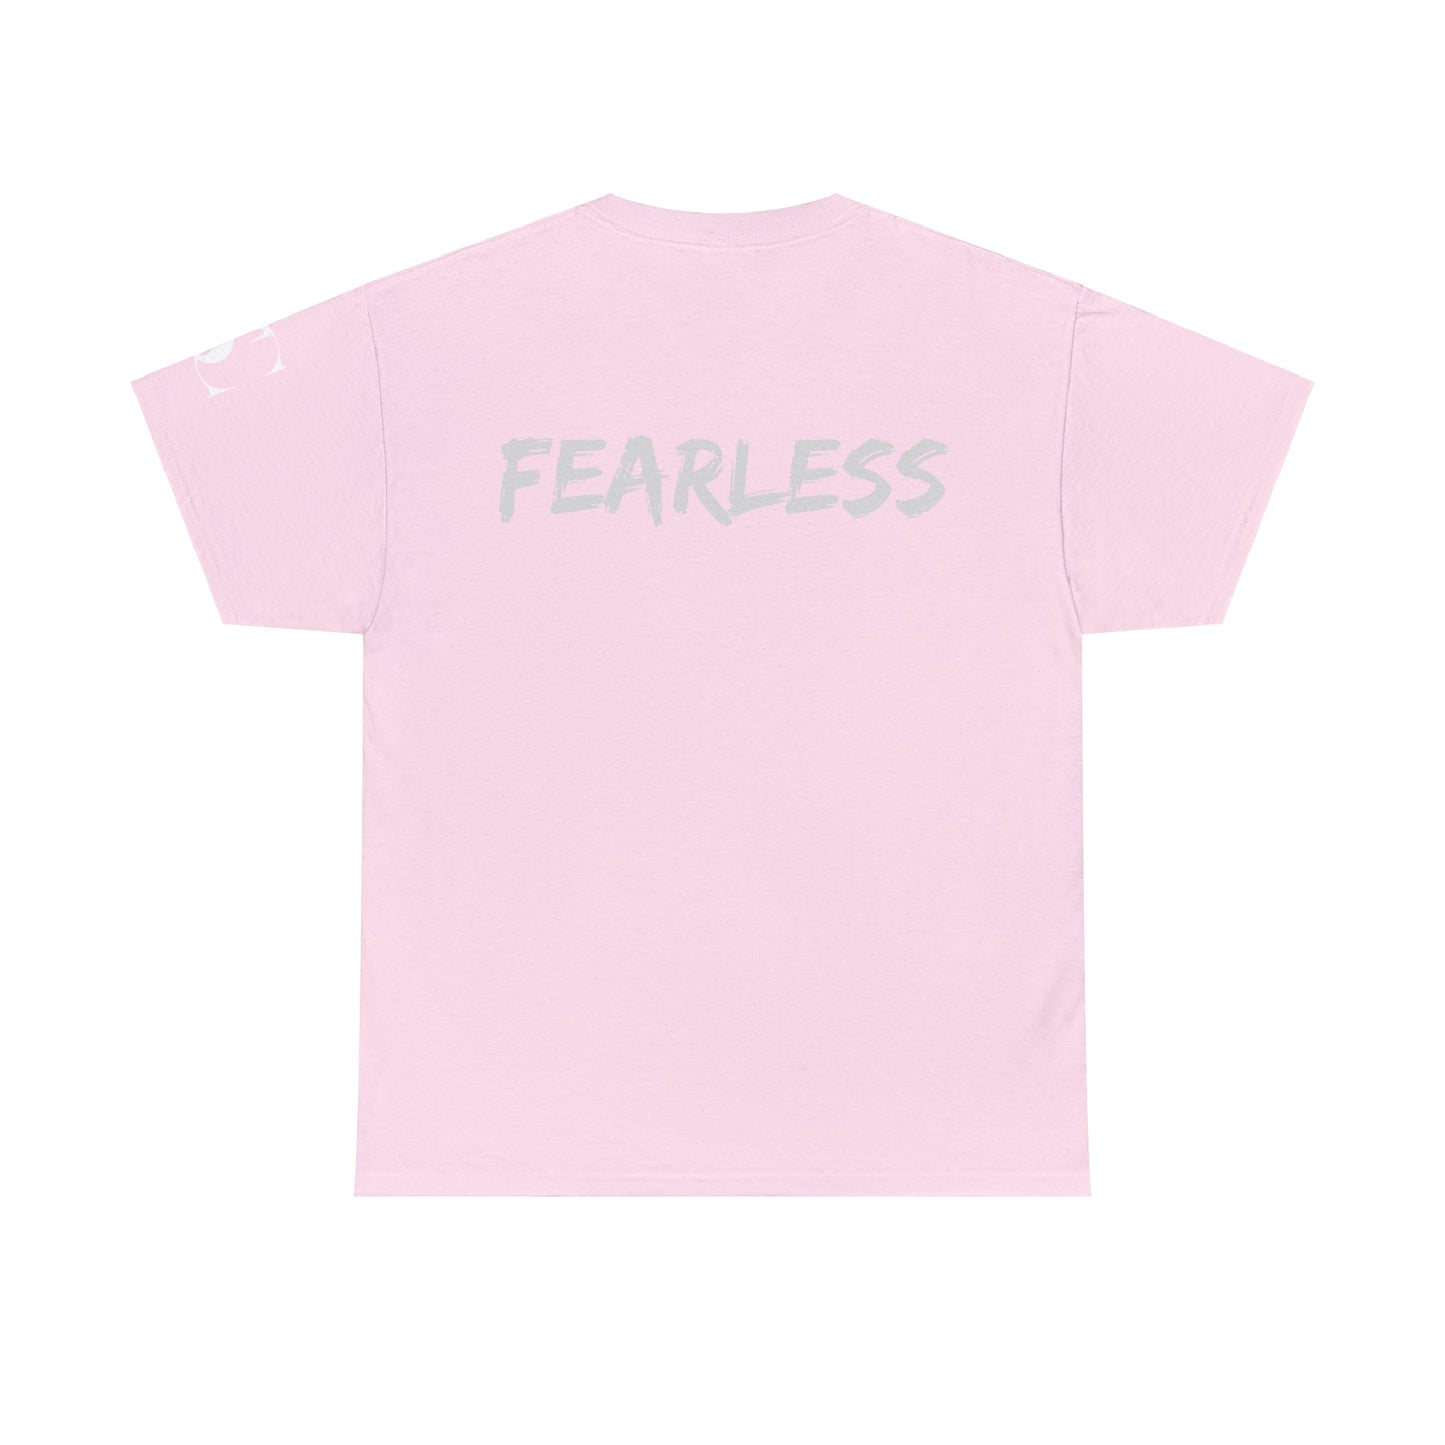 Fearless global T-shirt